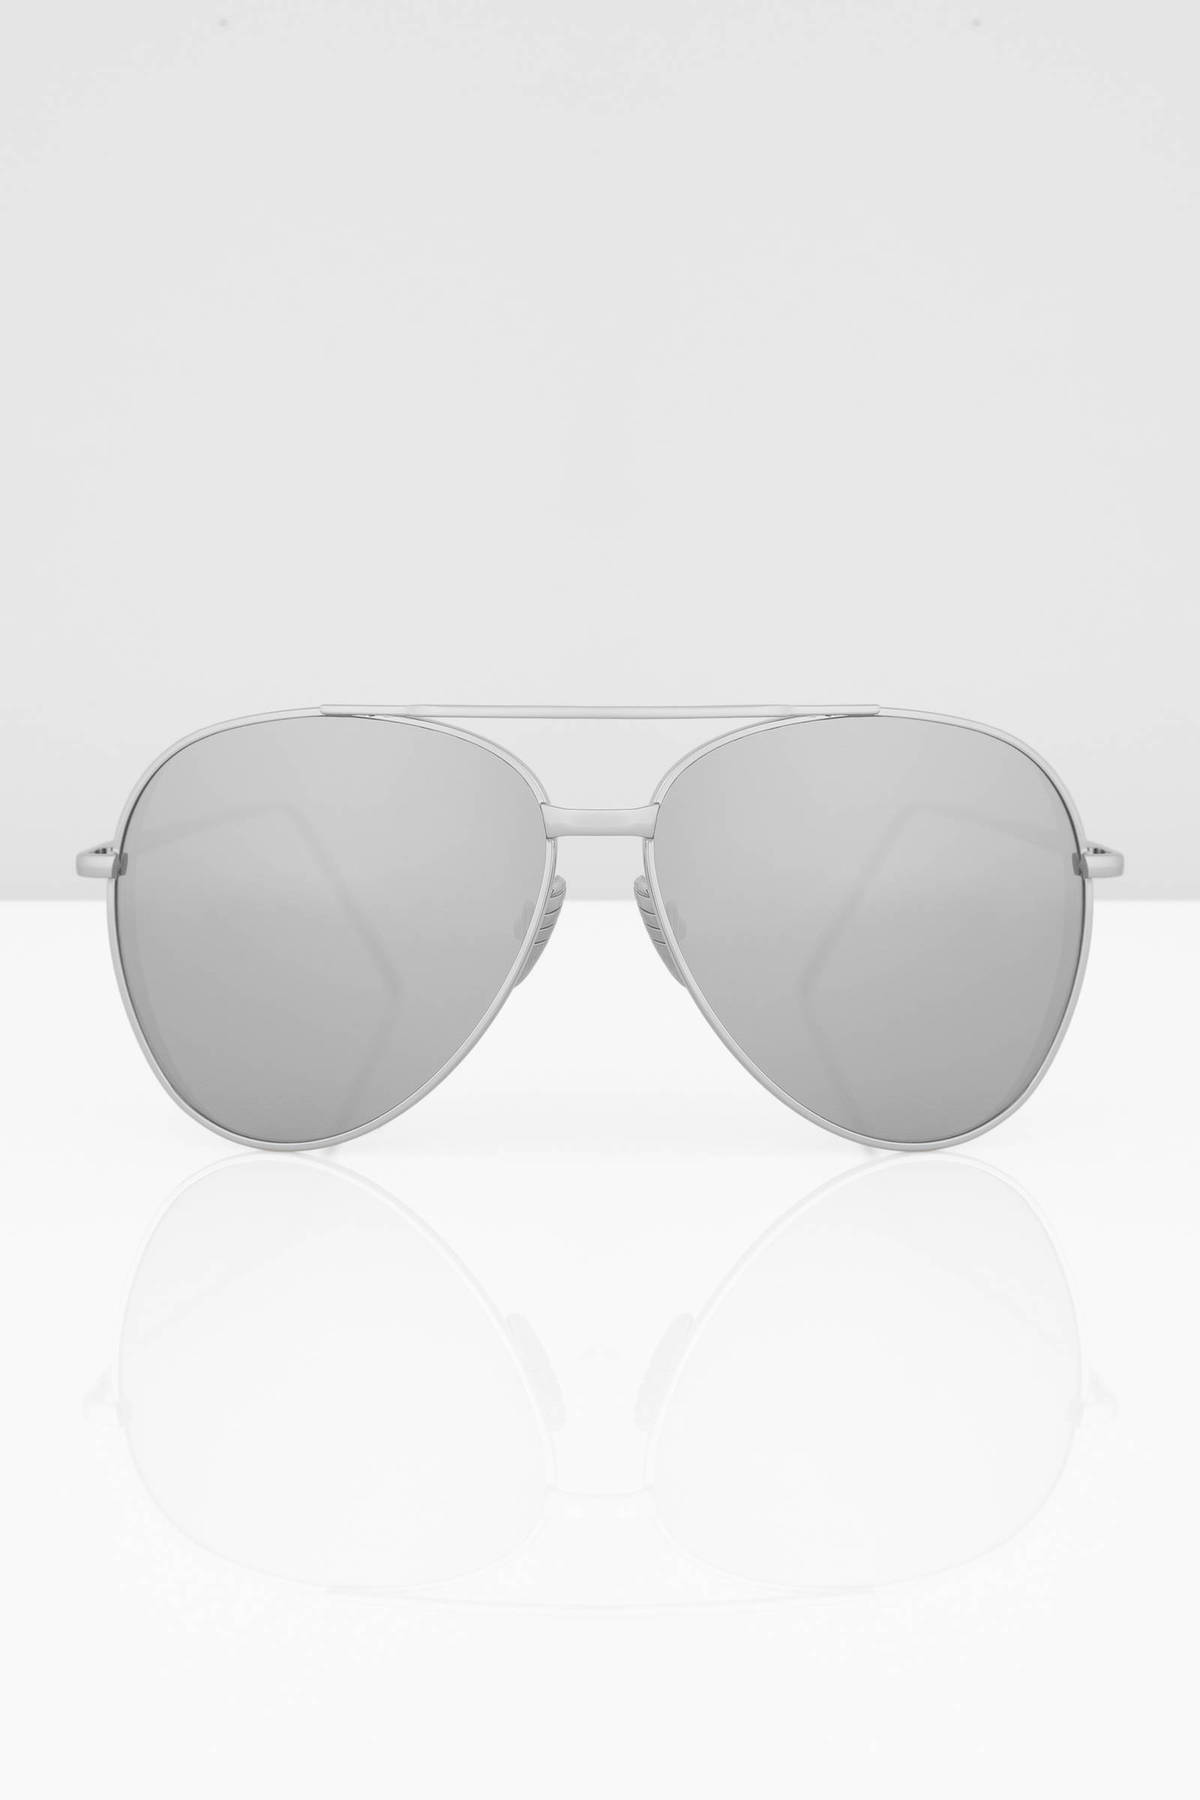 Reflections Aviator Sunglasses in Silver - $9 | Tobi US